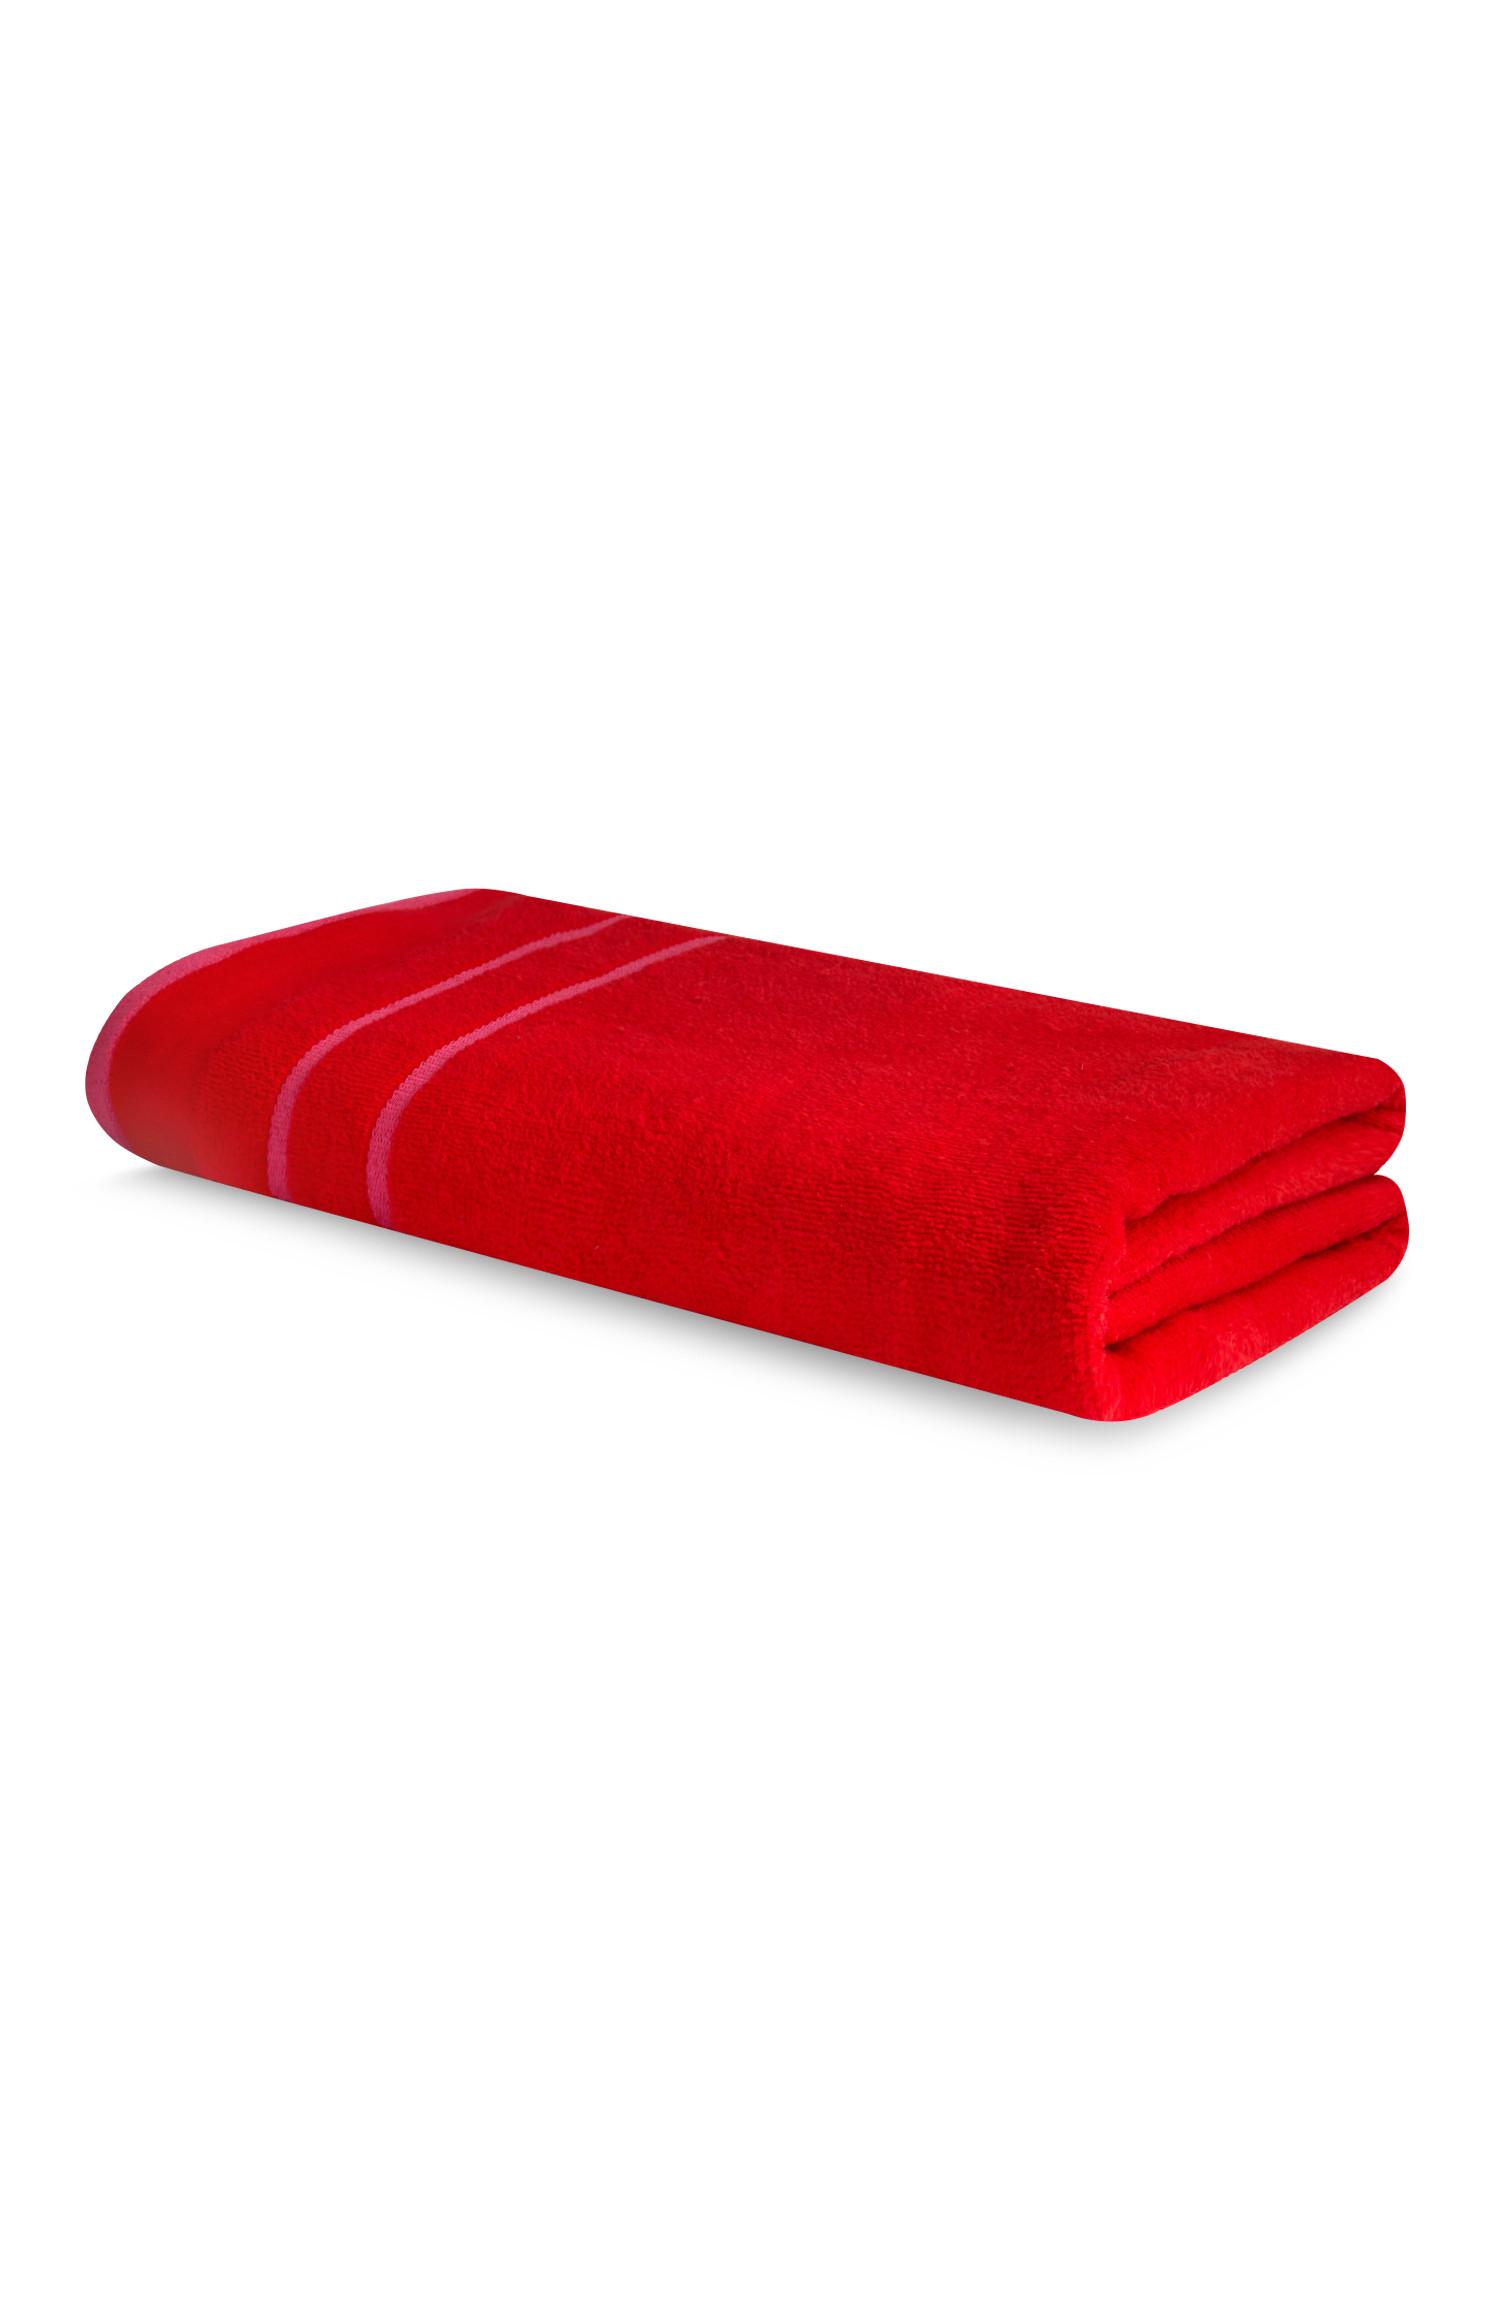 Red Beach Towel | Bathroom Accessories | All Homeware | Homeware | All Primark Products | Primark UK